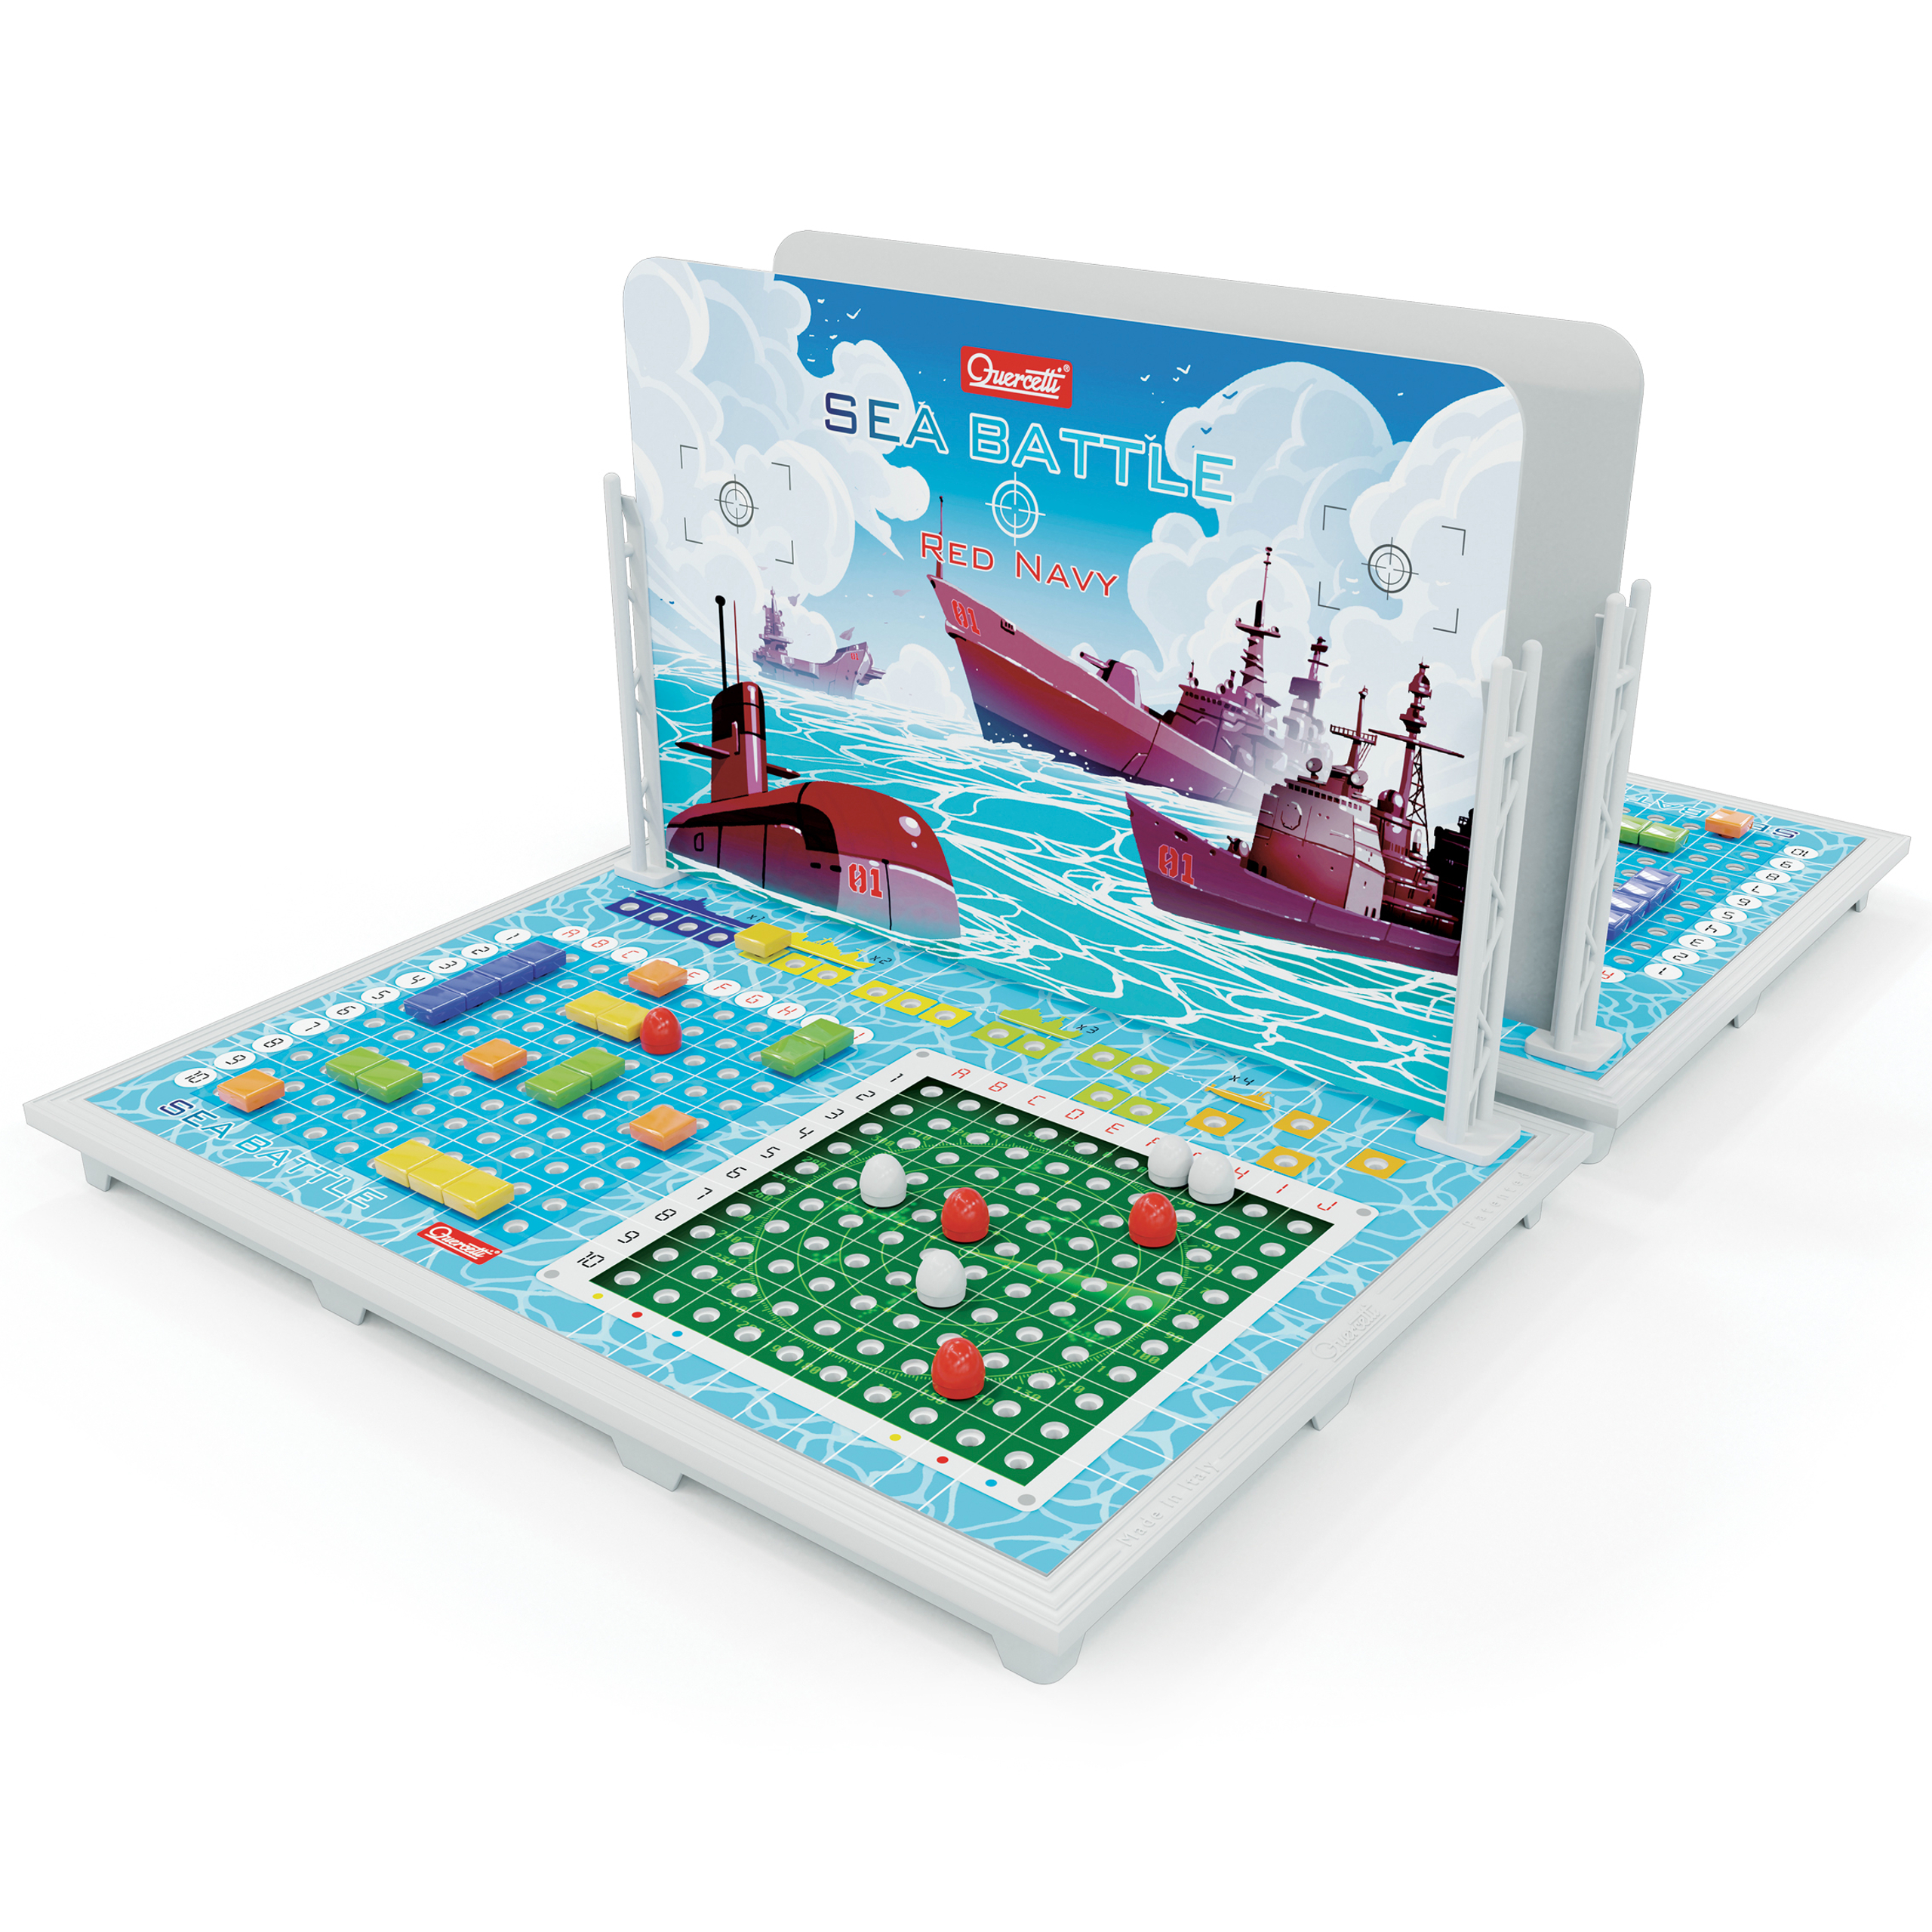 Kids puzzles quercetti game sea battle